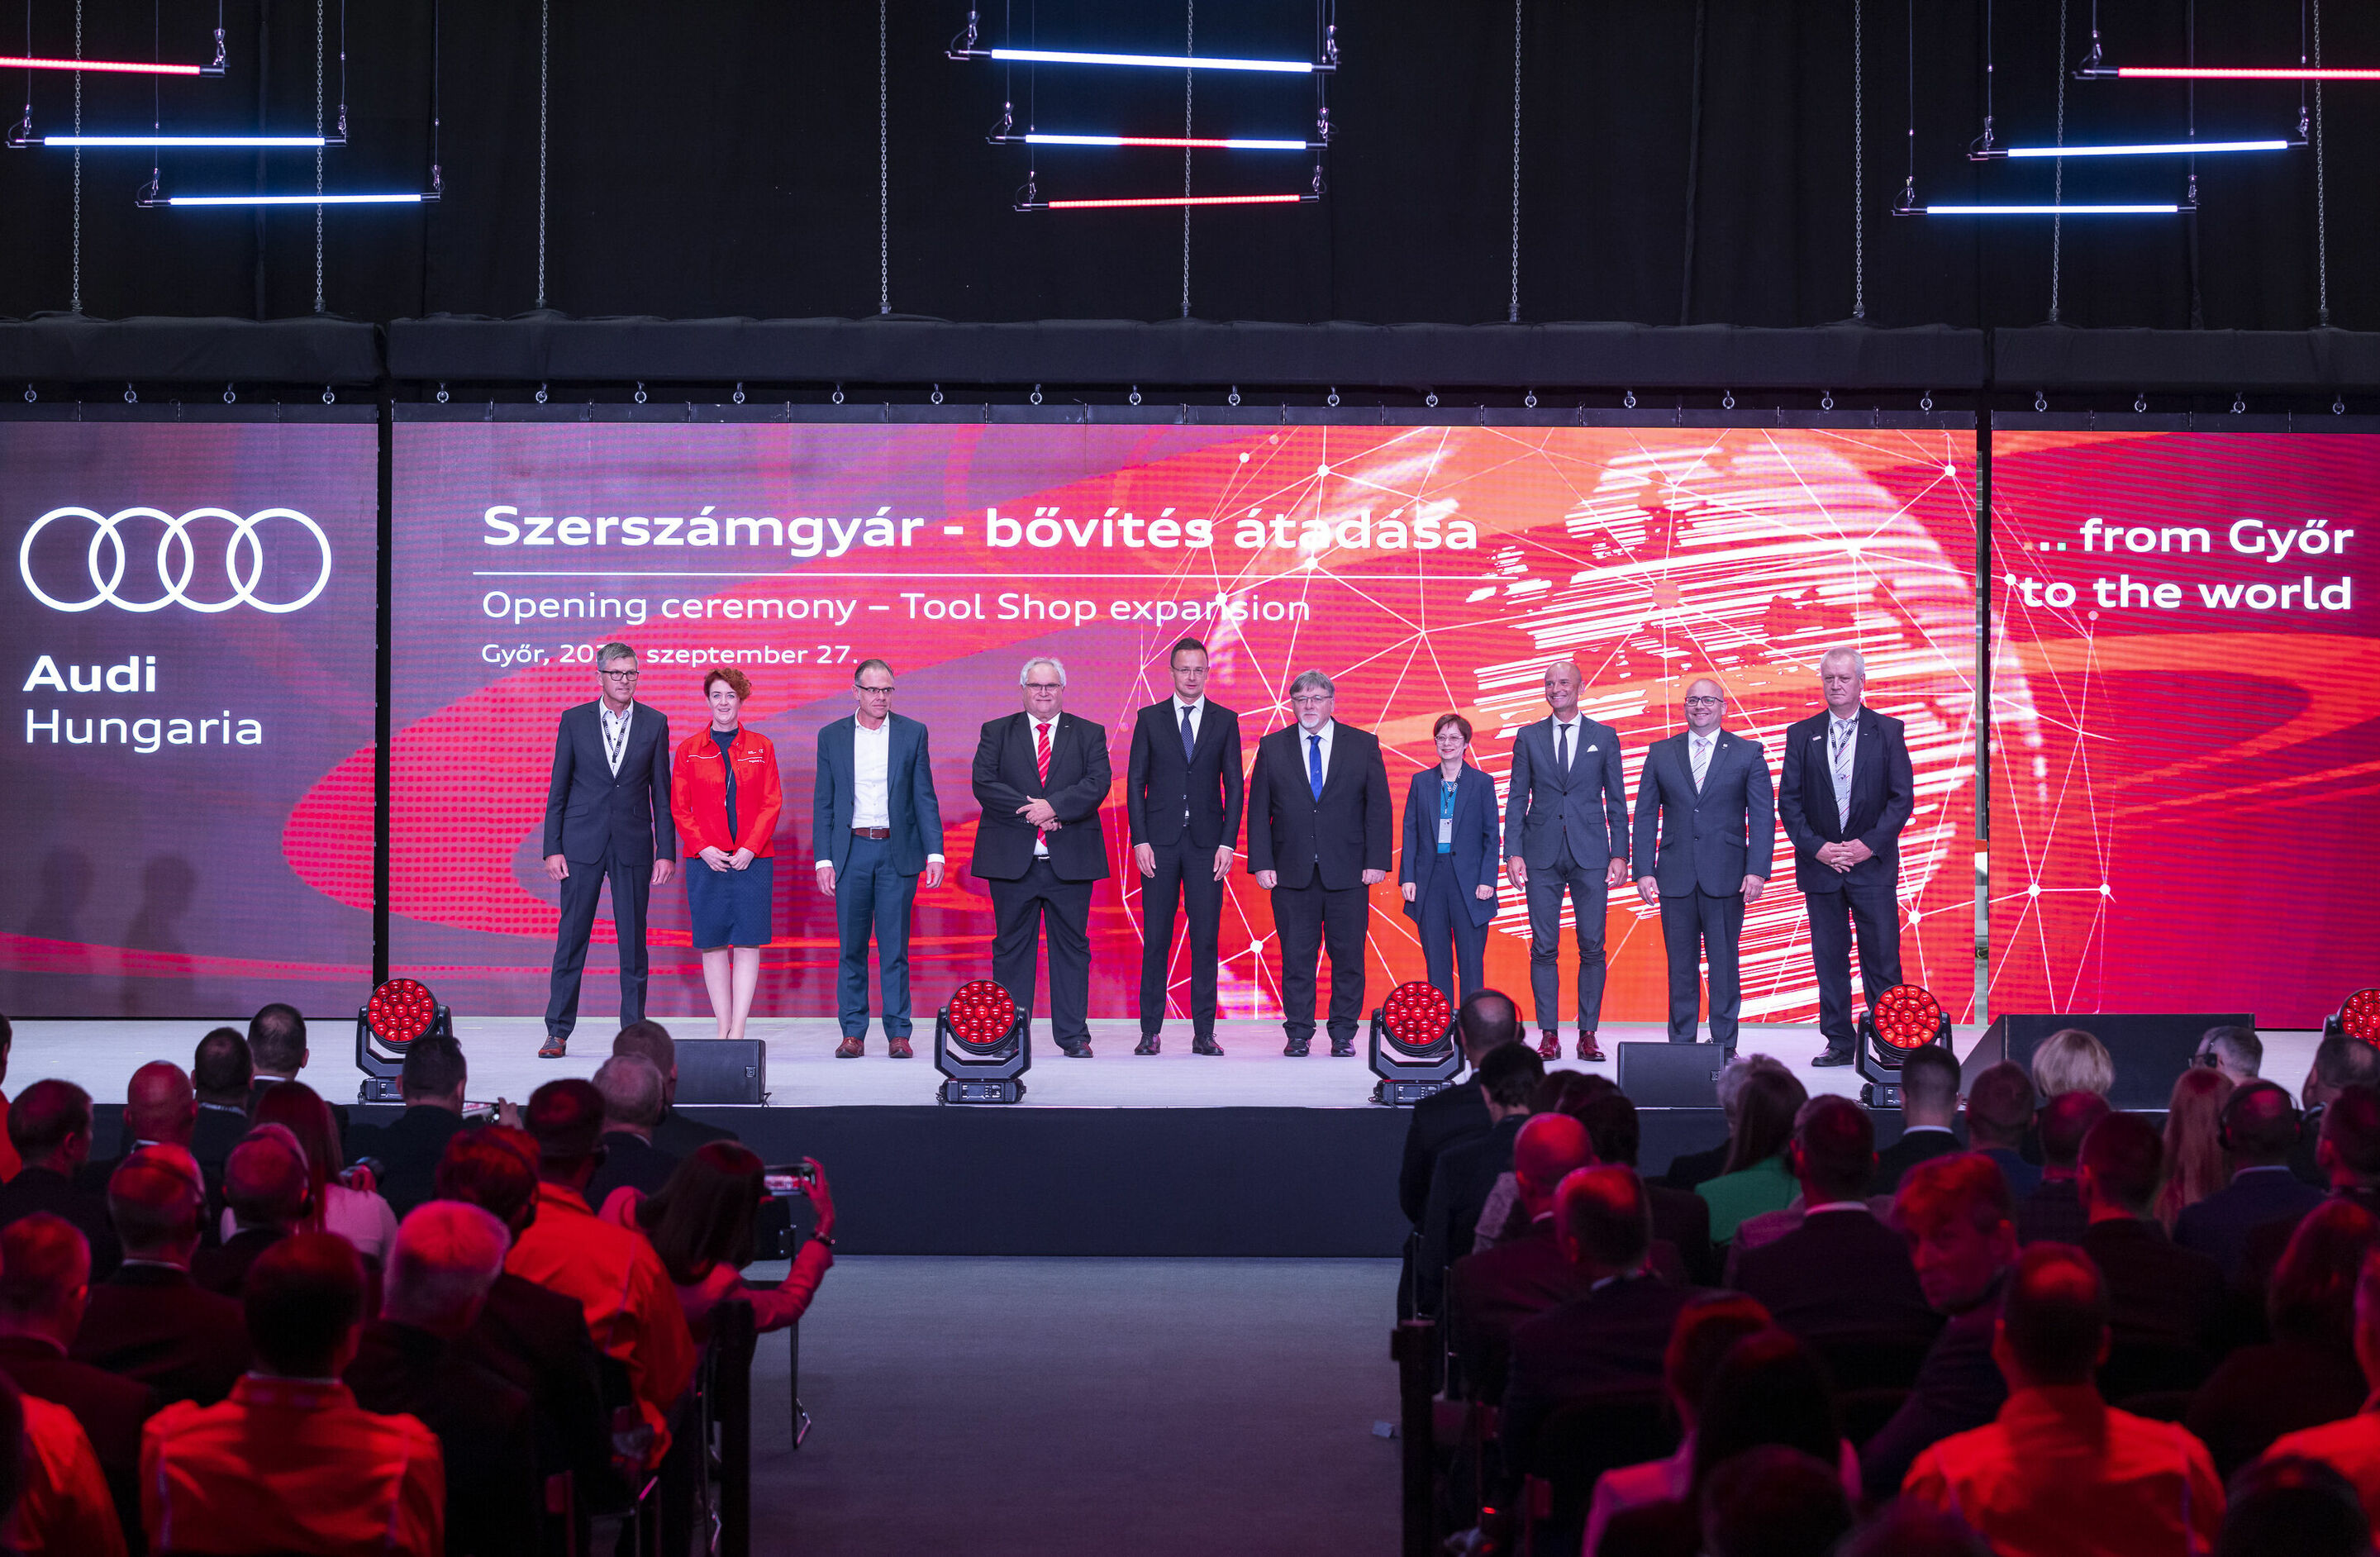 Audi Hungaria: Tool shop expansion marks major milestone in Győr